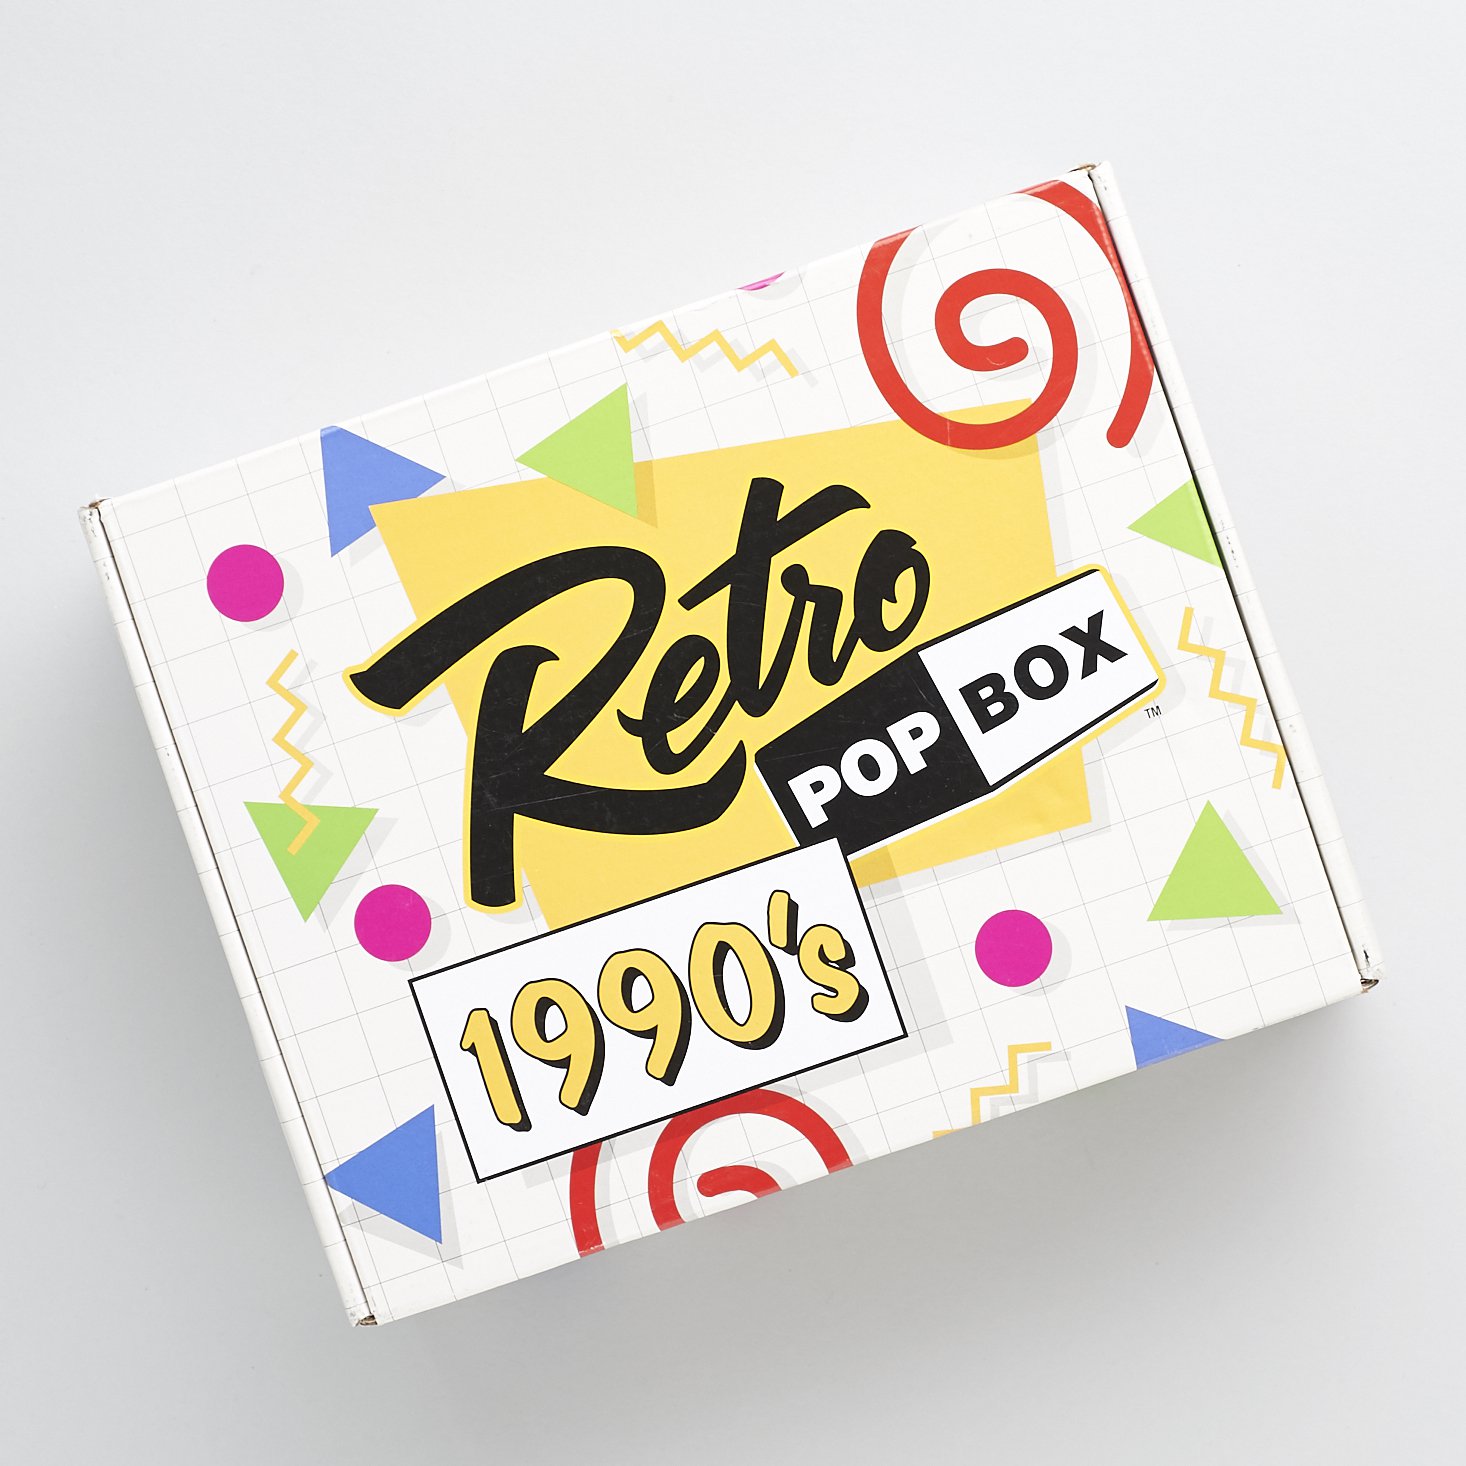 Retro-Pop-Box-1990s-February-2017-0001